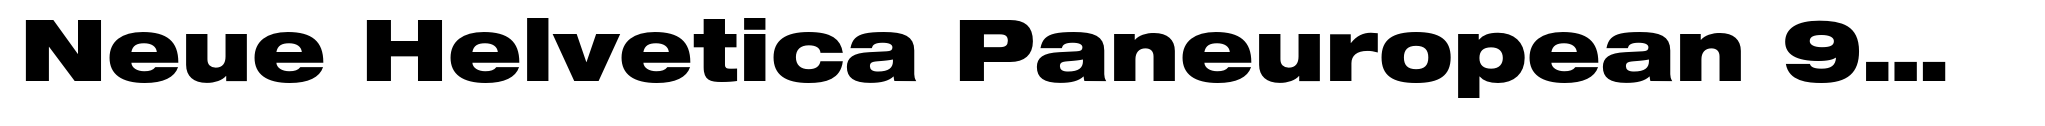 Neue Helvetica Paneuropean 93 Extended Black image